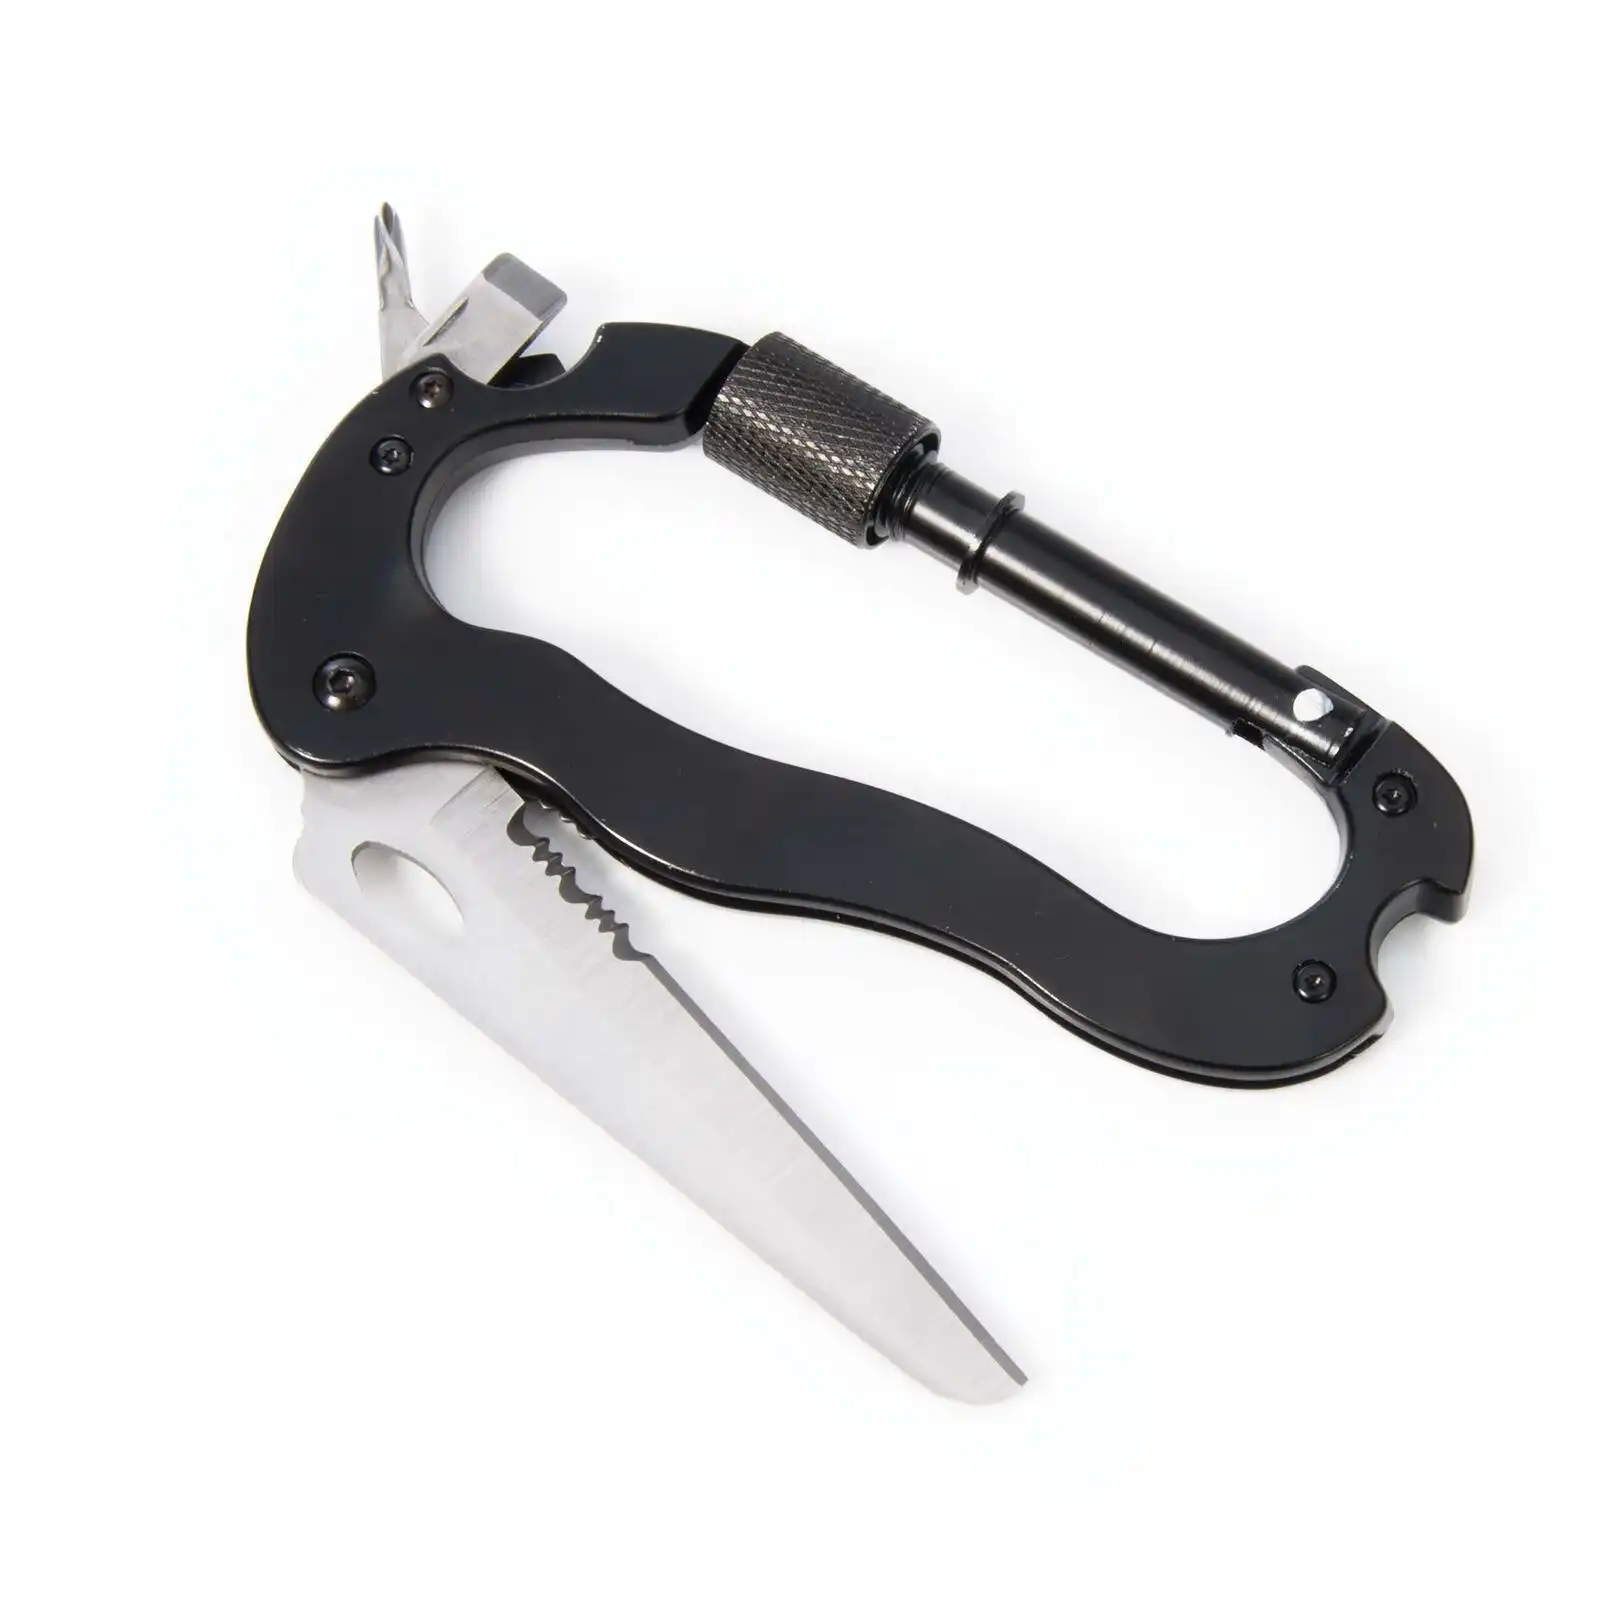 IS Gift 5-in-1 Carabiner Multi-Tool Philips Screwdriver/Bottle Opener/Knife BLK